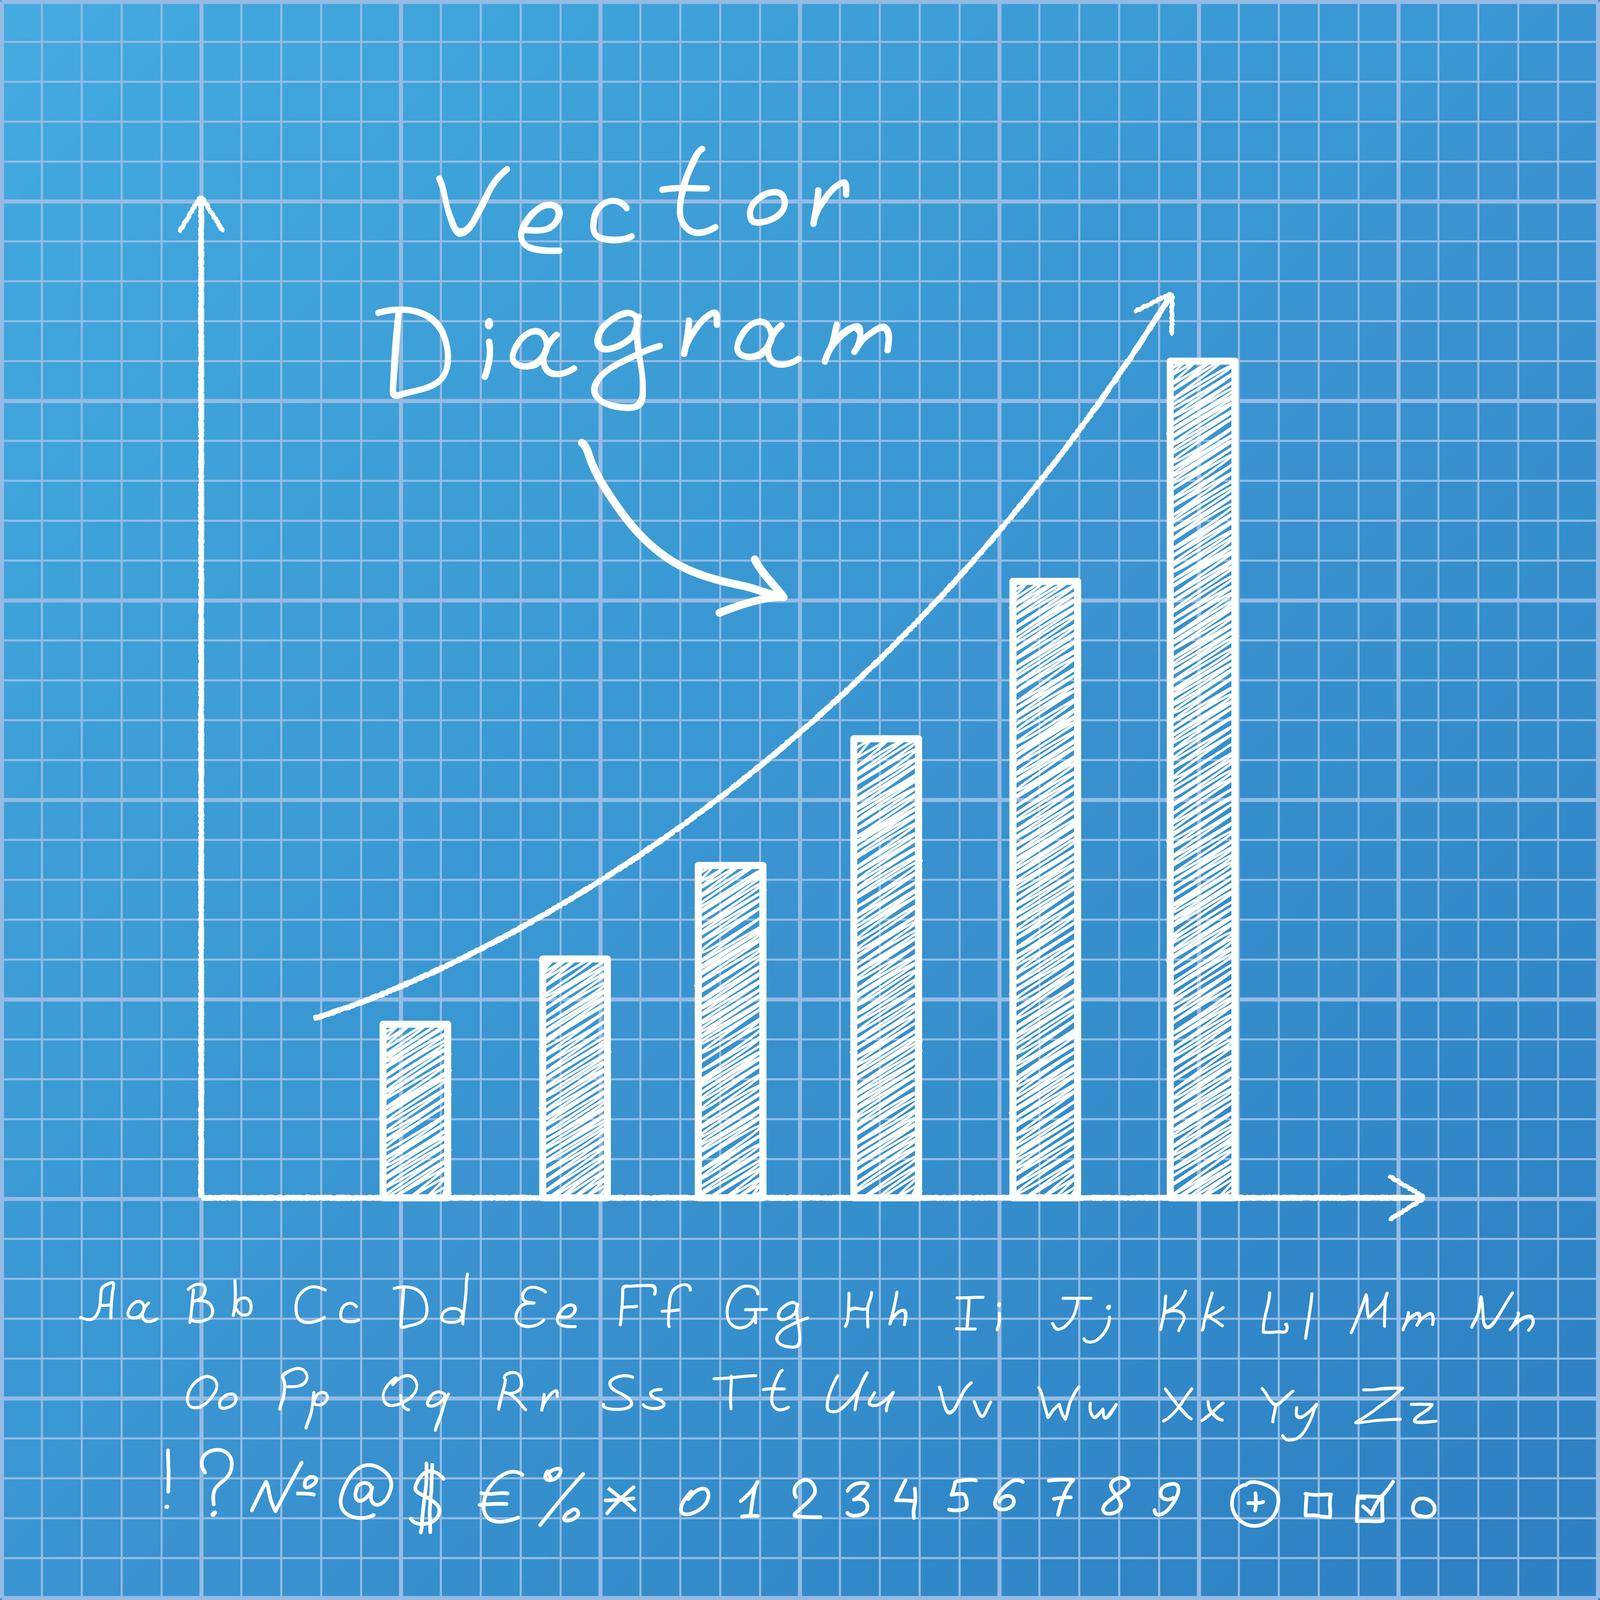 Blueprint diagram, alphabet and symbols. Vector design